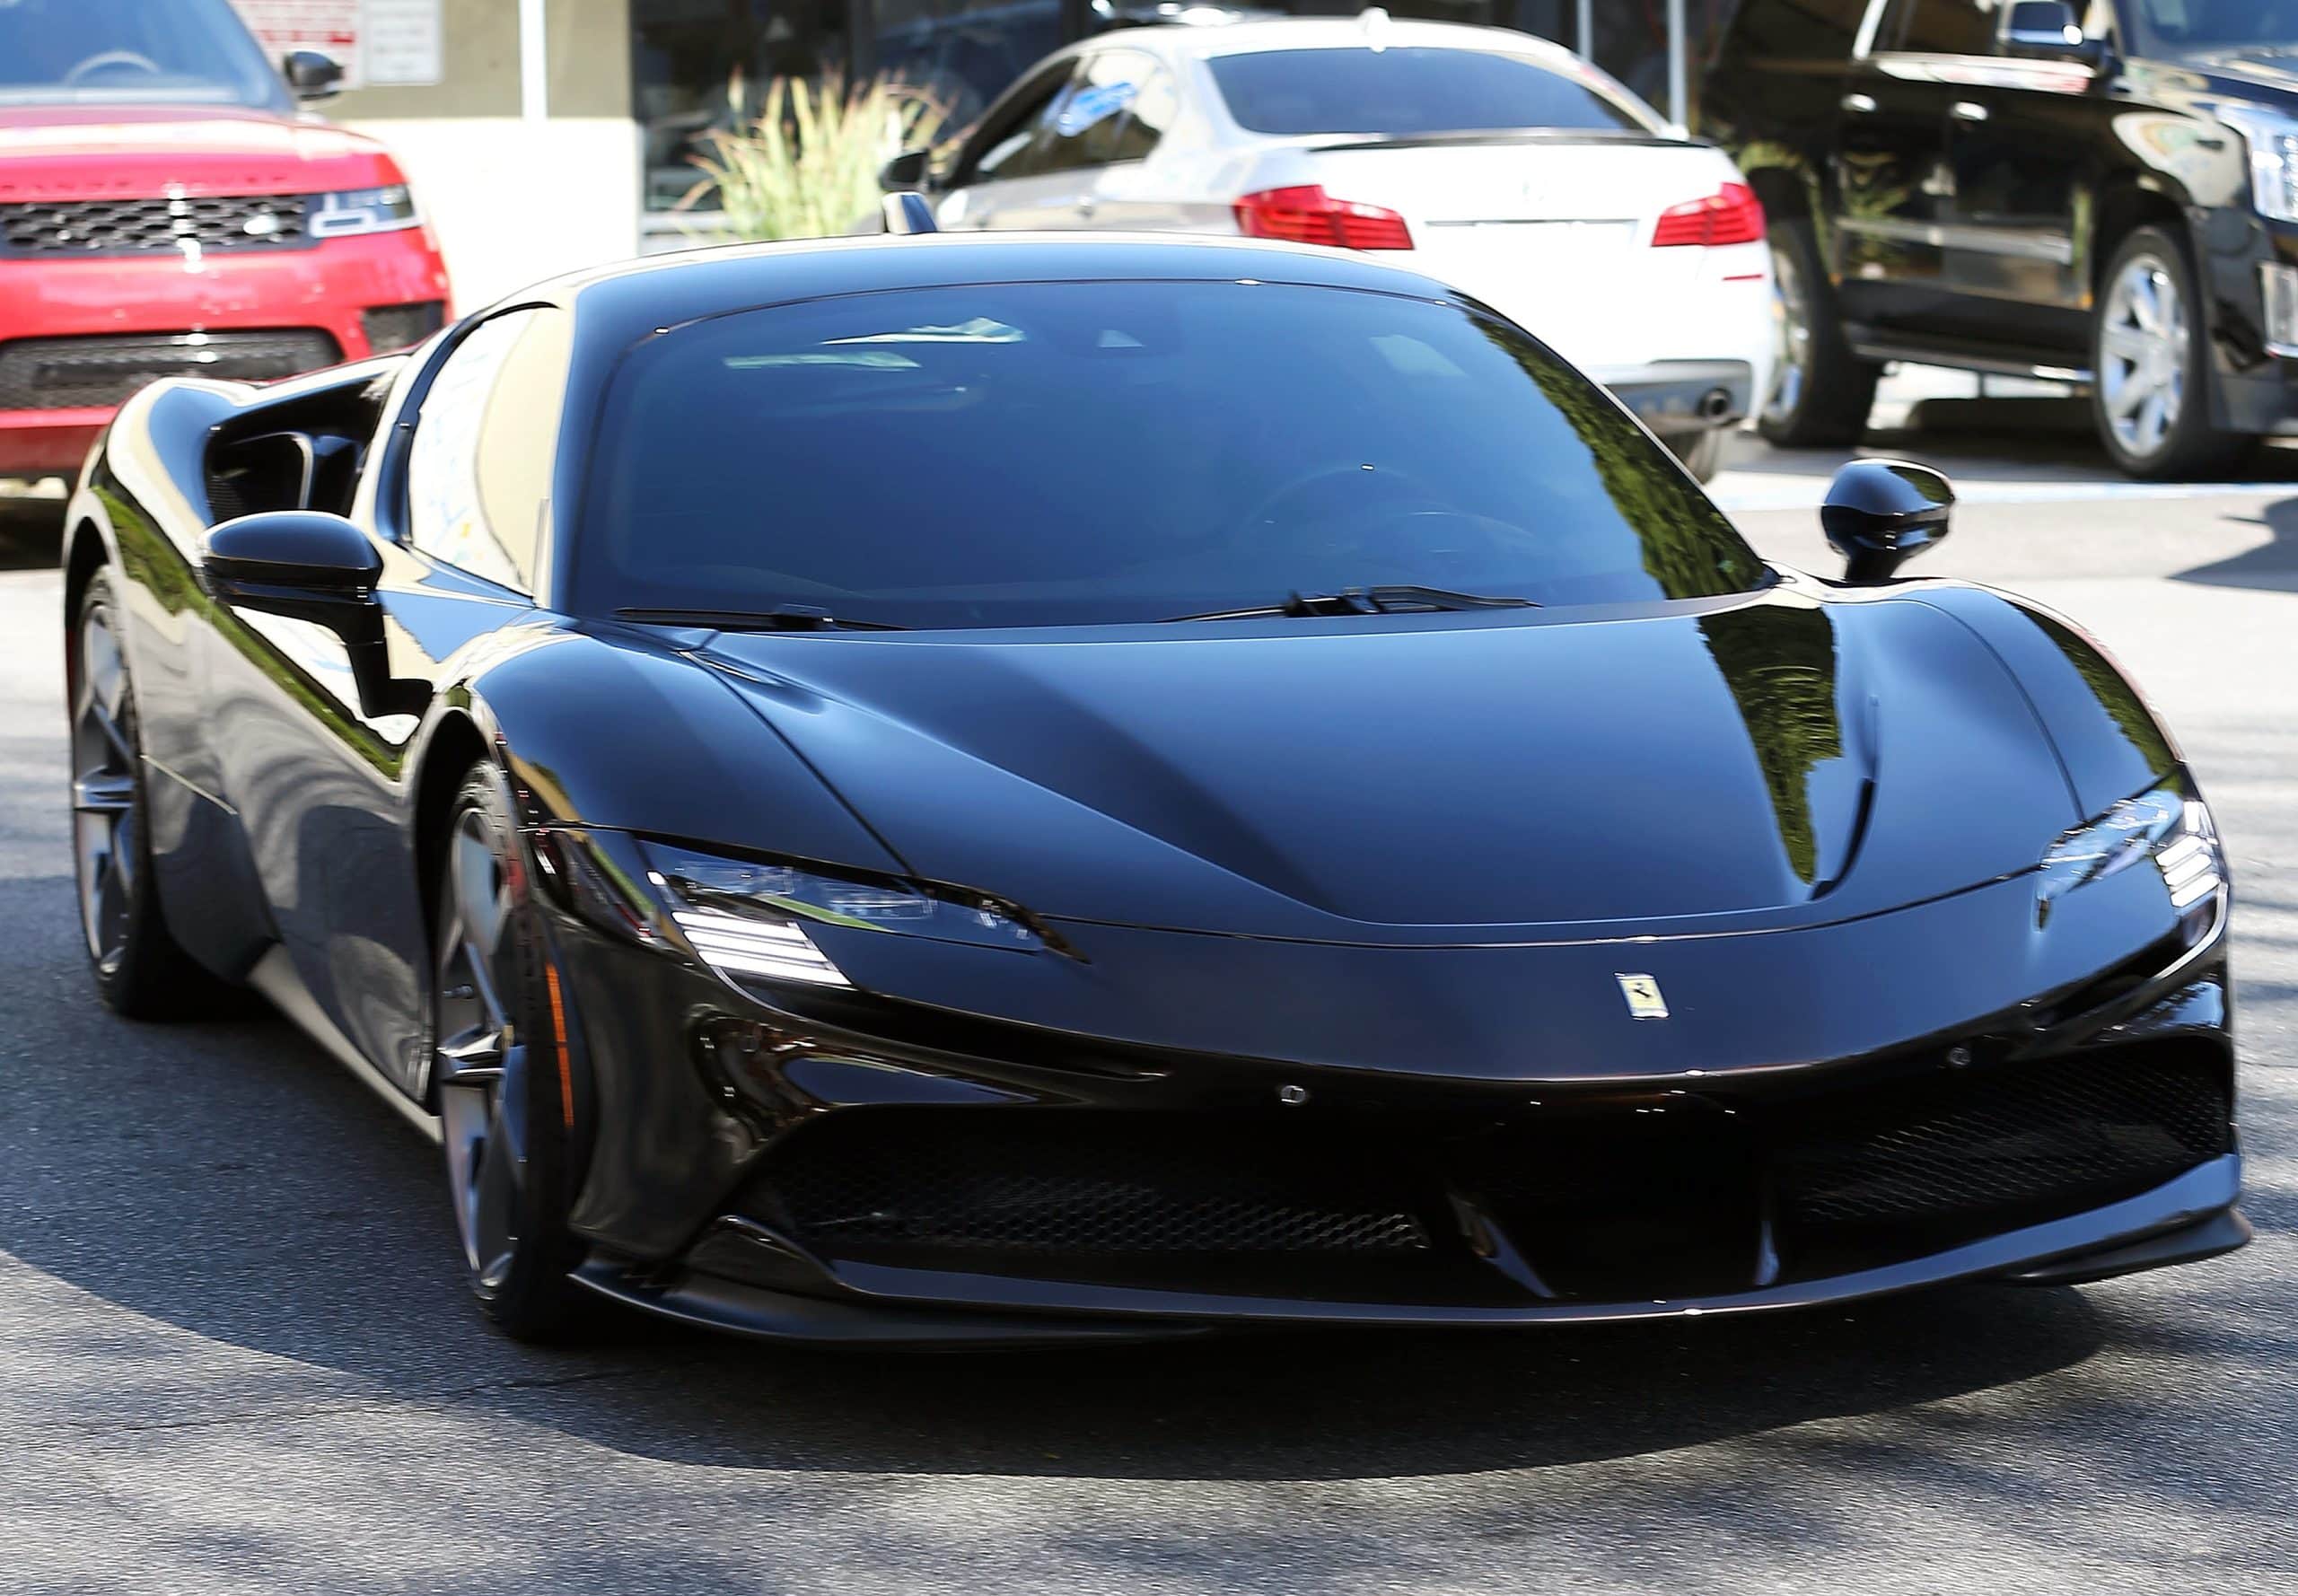 Kendall Jenner rides her Ferrari through Los Angeles